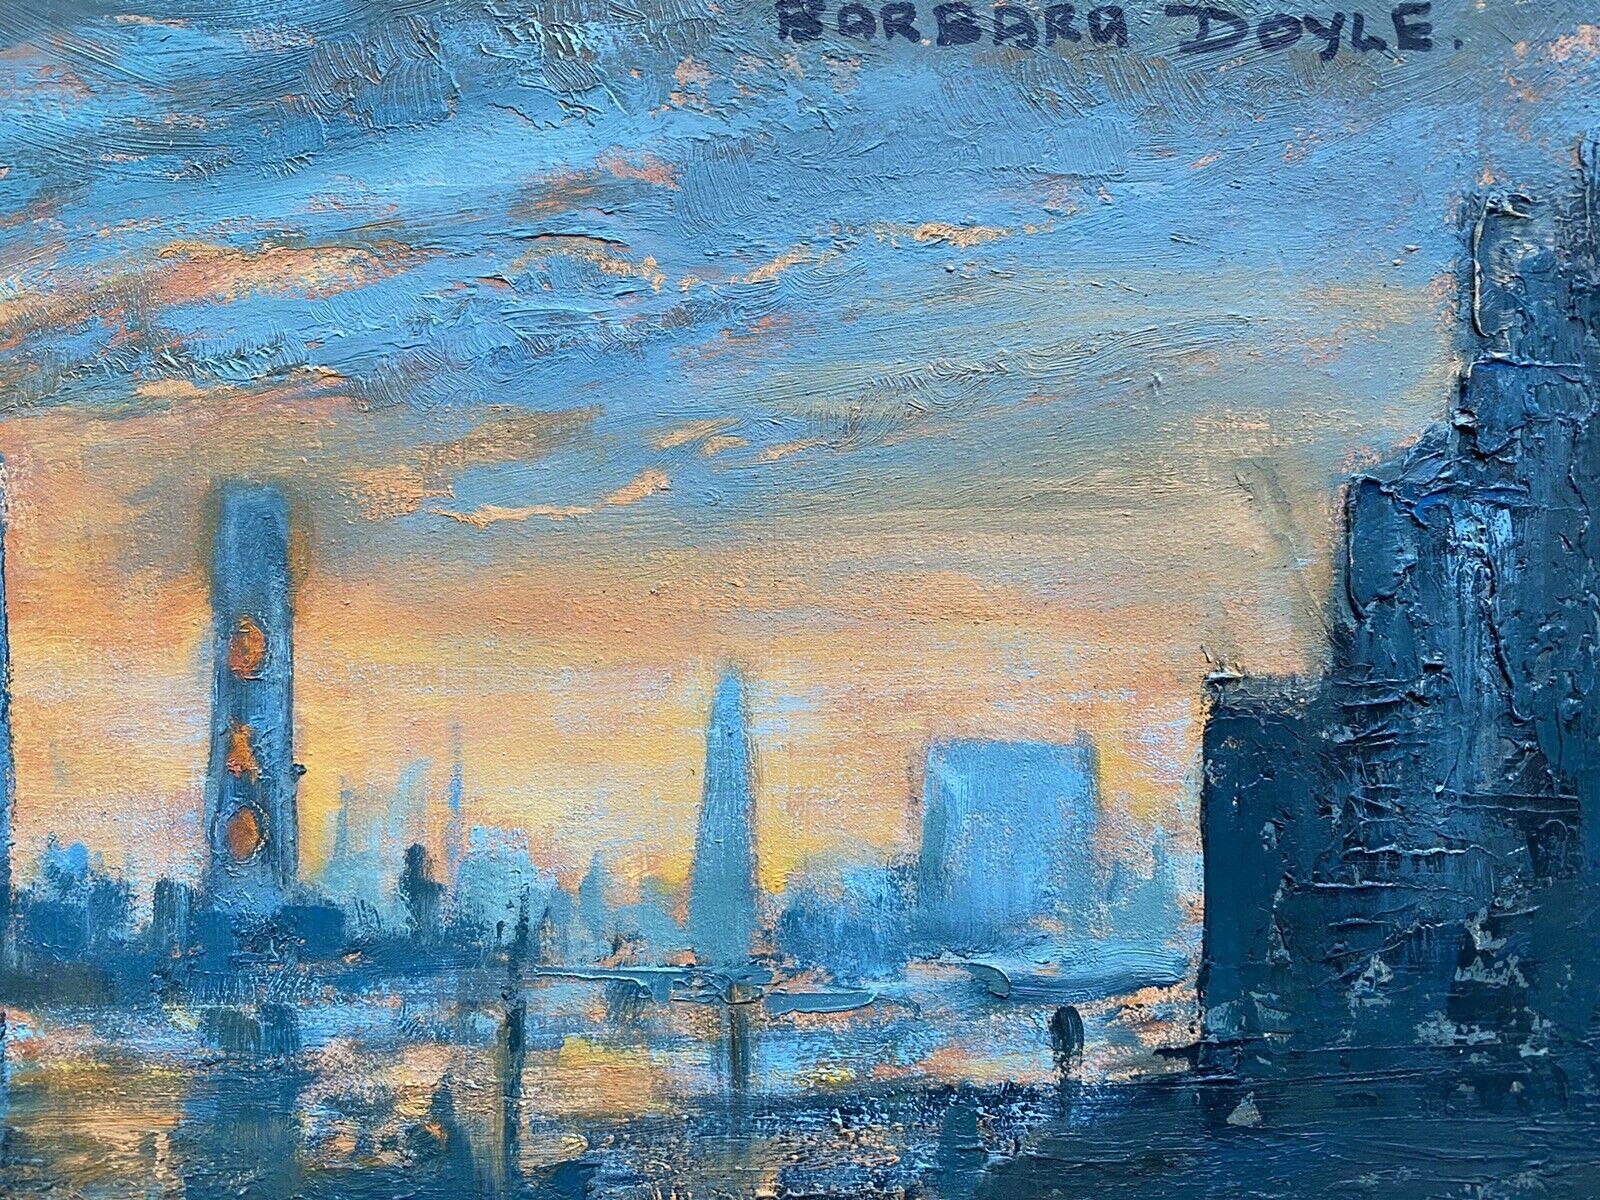 BARBARA DOYLE (B.1917) ORIGINAL MODERN BRITISH OIL PAINTING - LONDON BRIDGE - Impressionist Painting by Barbera Doyle